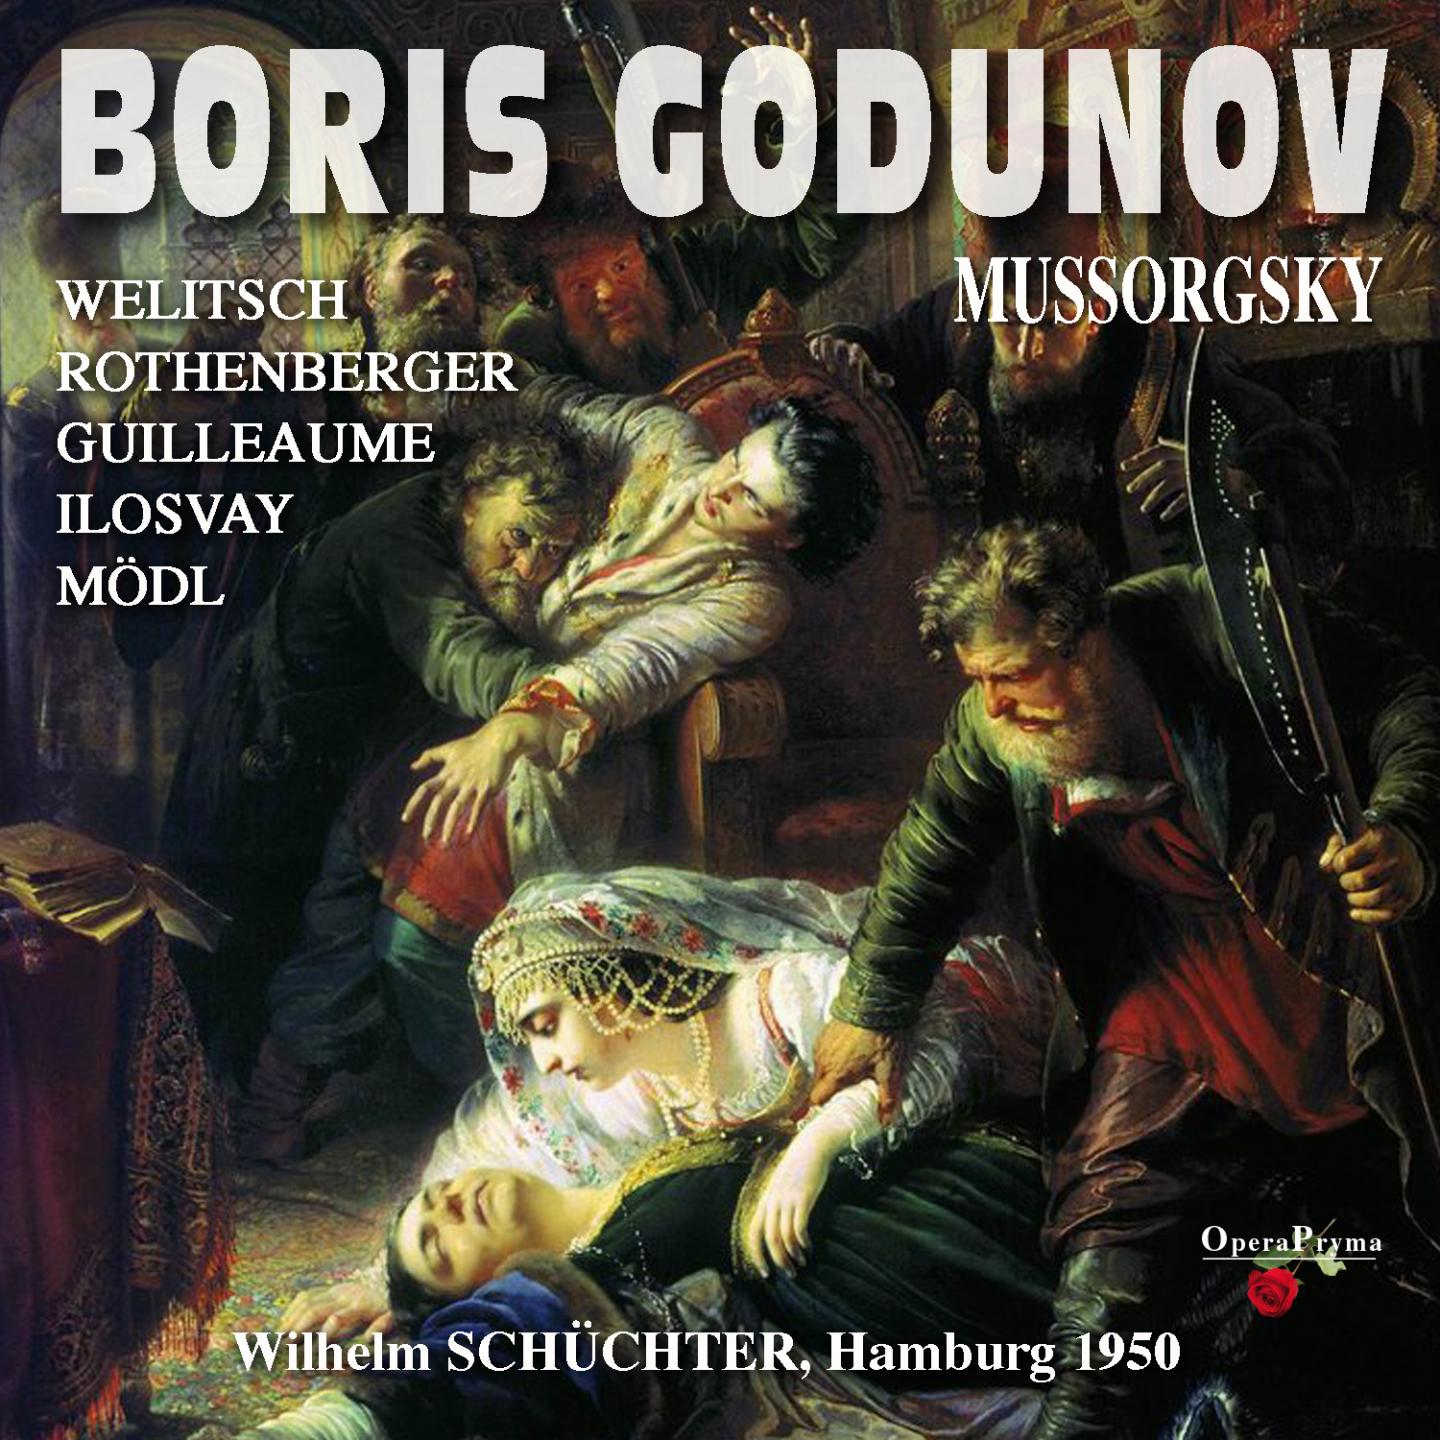 Boris Godunov, Act II, Scene 1: " Wo weilst du, Br utigam?" Xenia